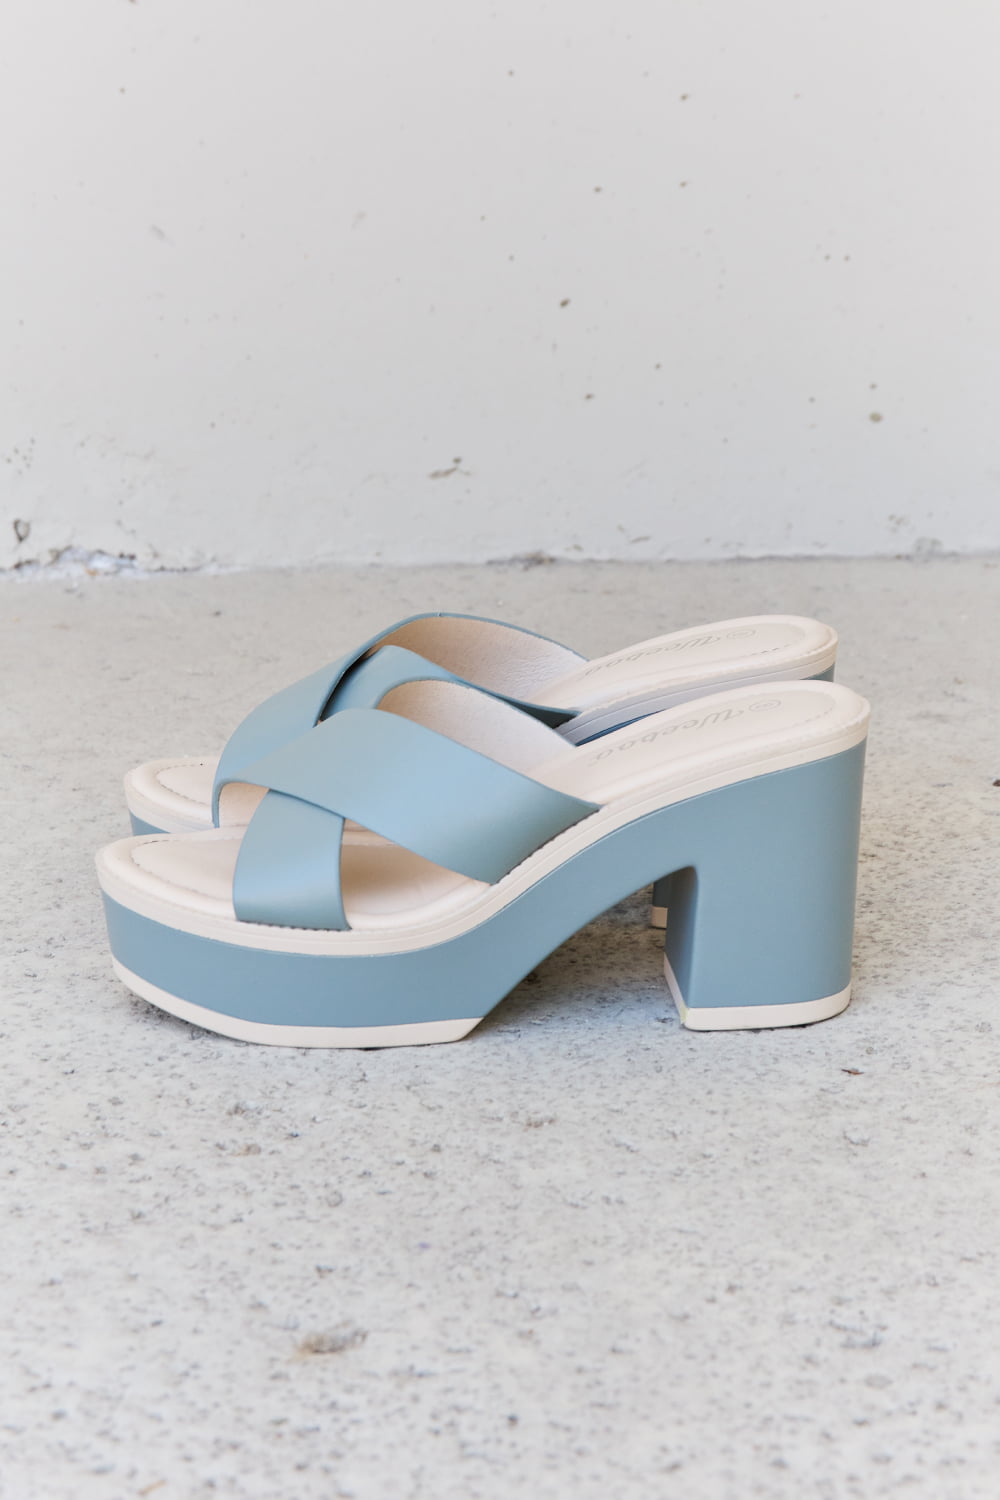 Weeboo Contrast Platform Slide On Slip In Cross Strap Thick Sole High Heel Sandals in Misty Blue